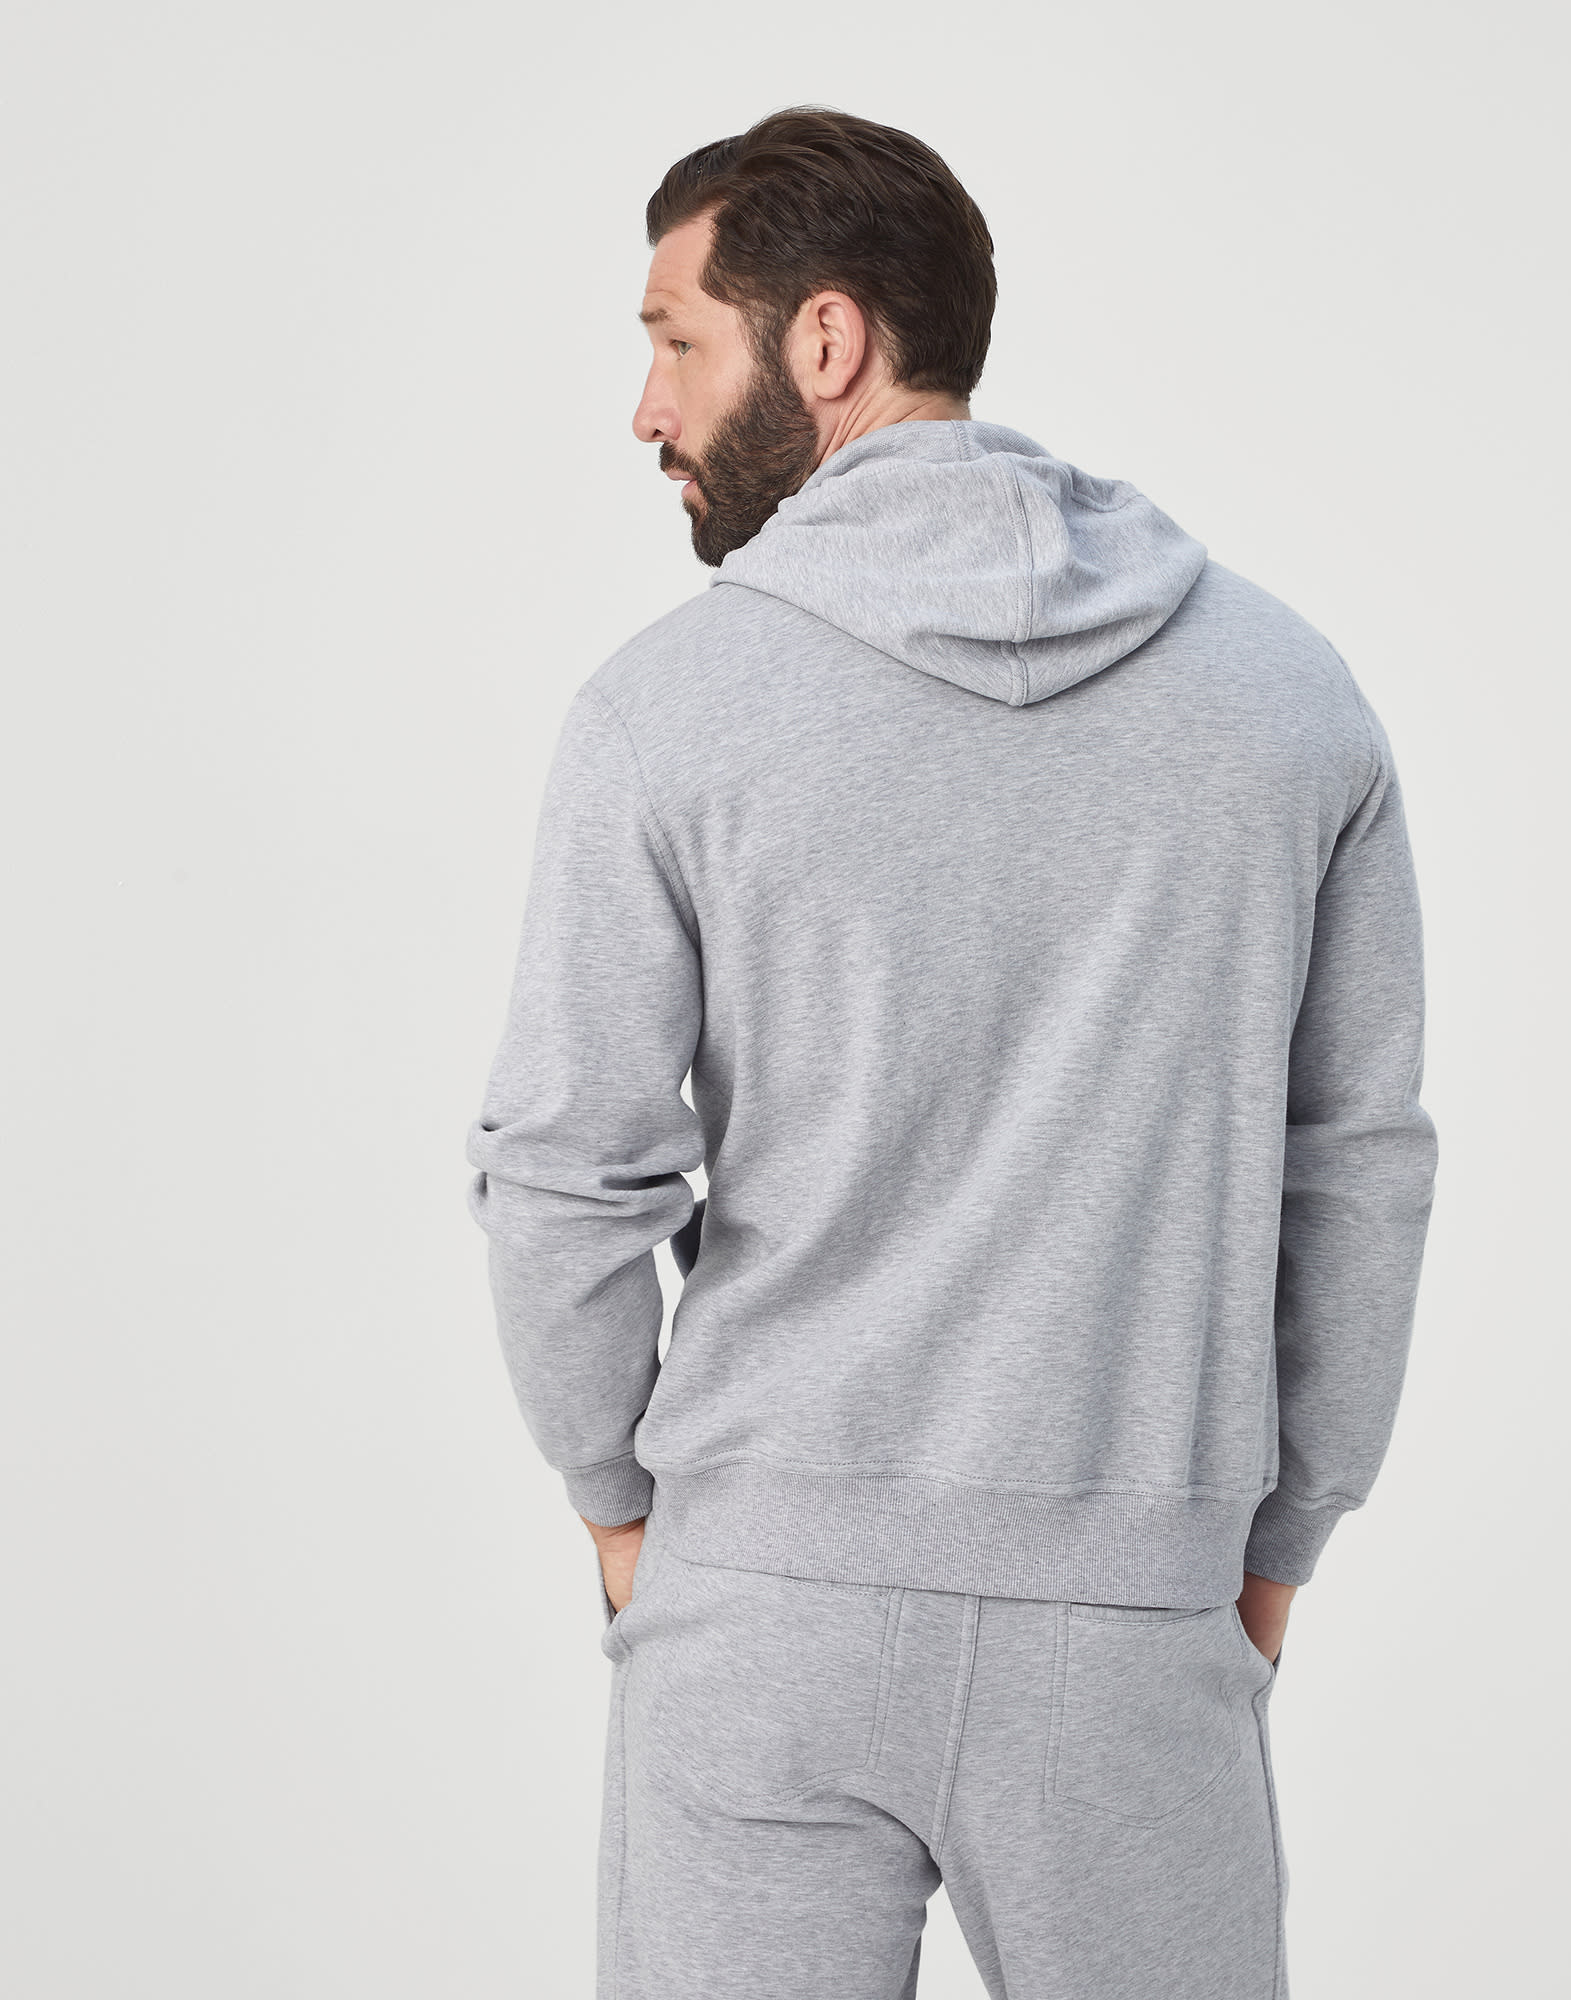 Sweatshirt with hood (241M0T359069G) for Man | Brunello Cucinelli